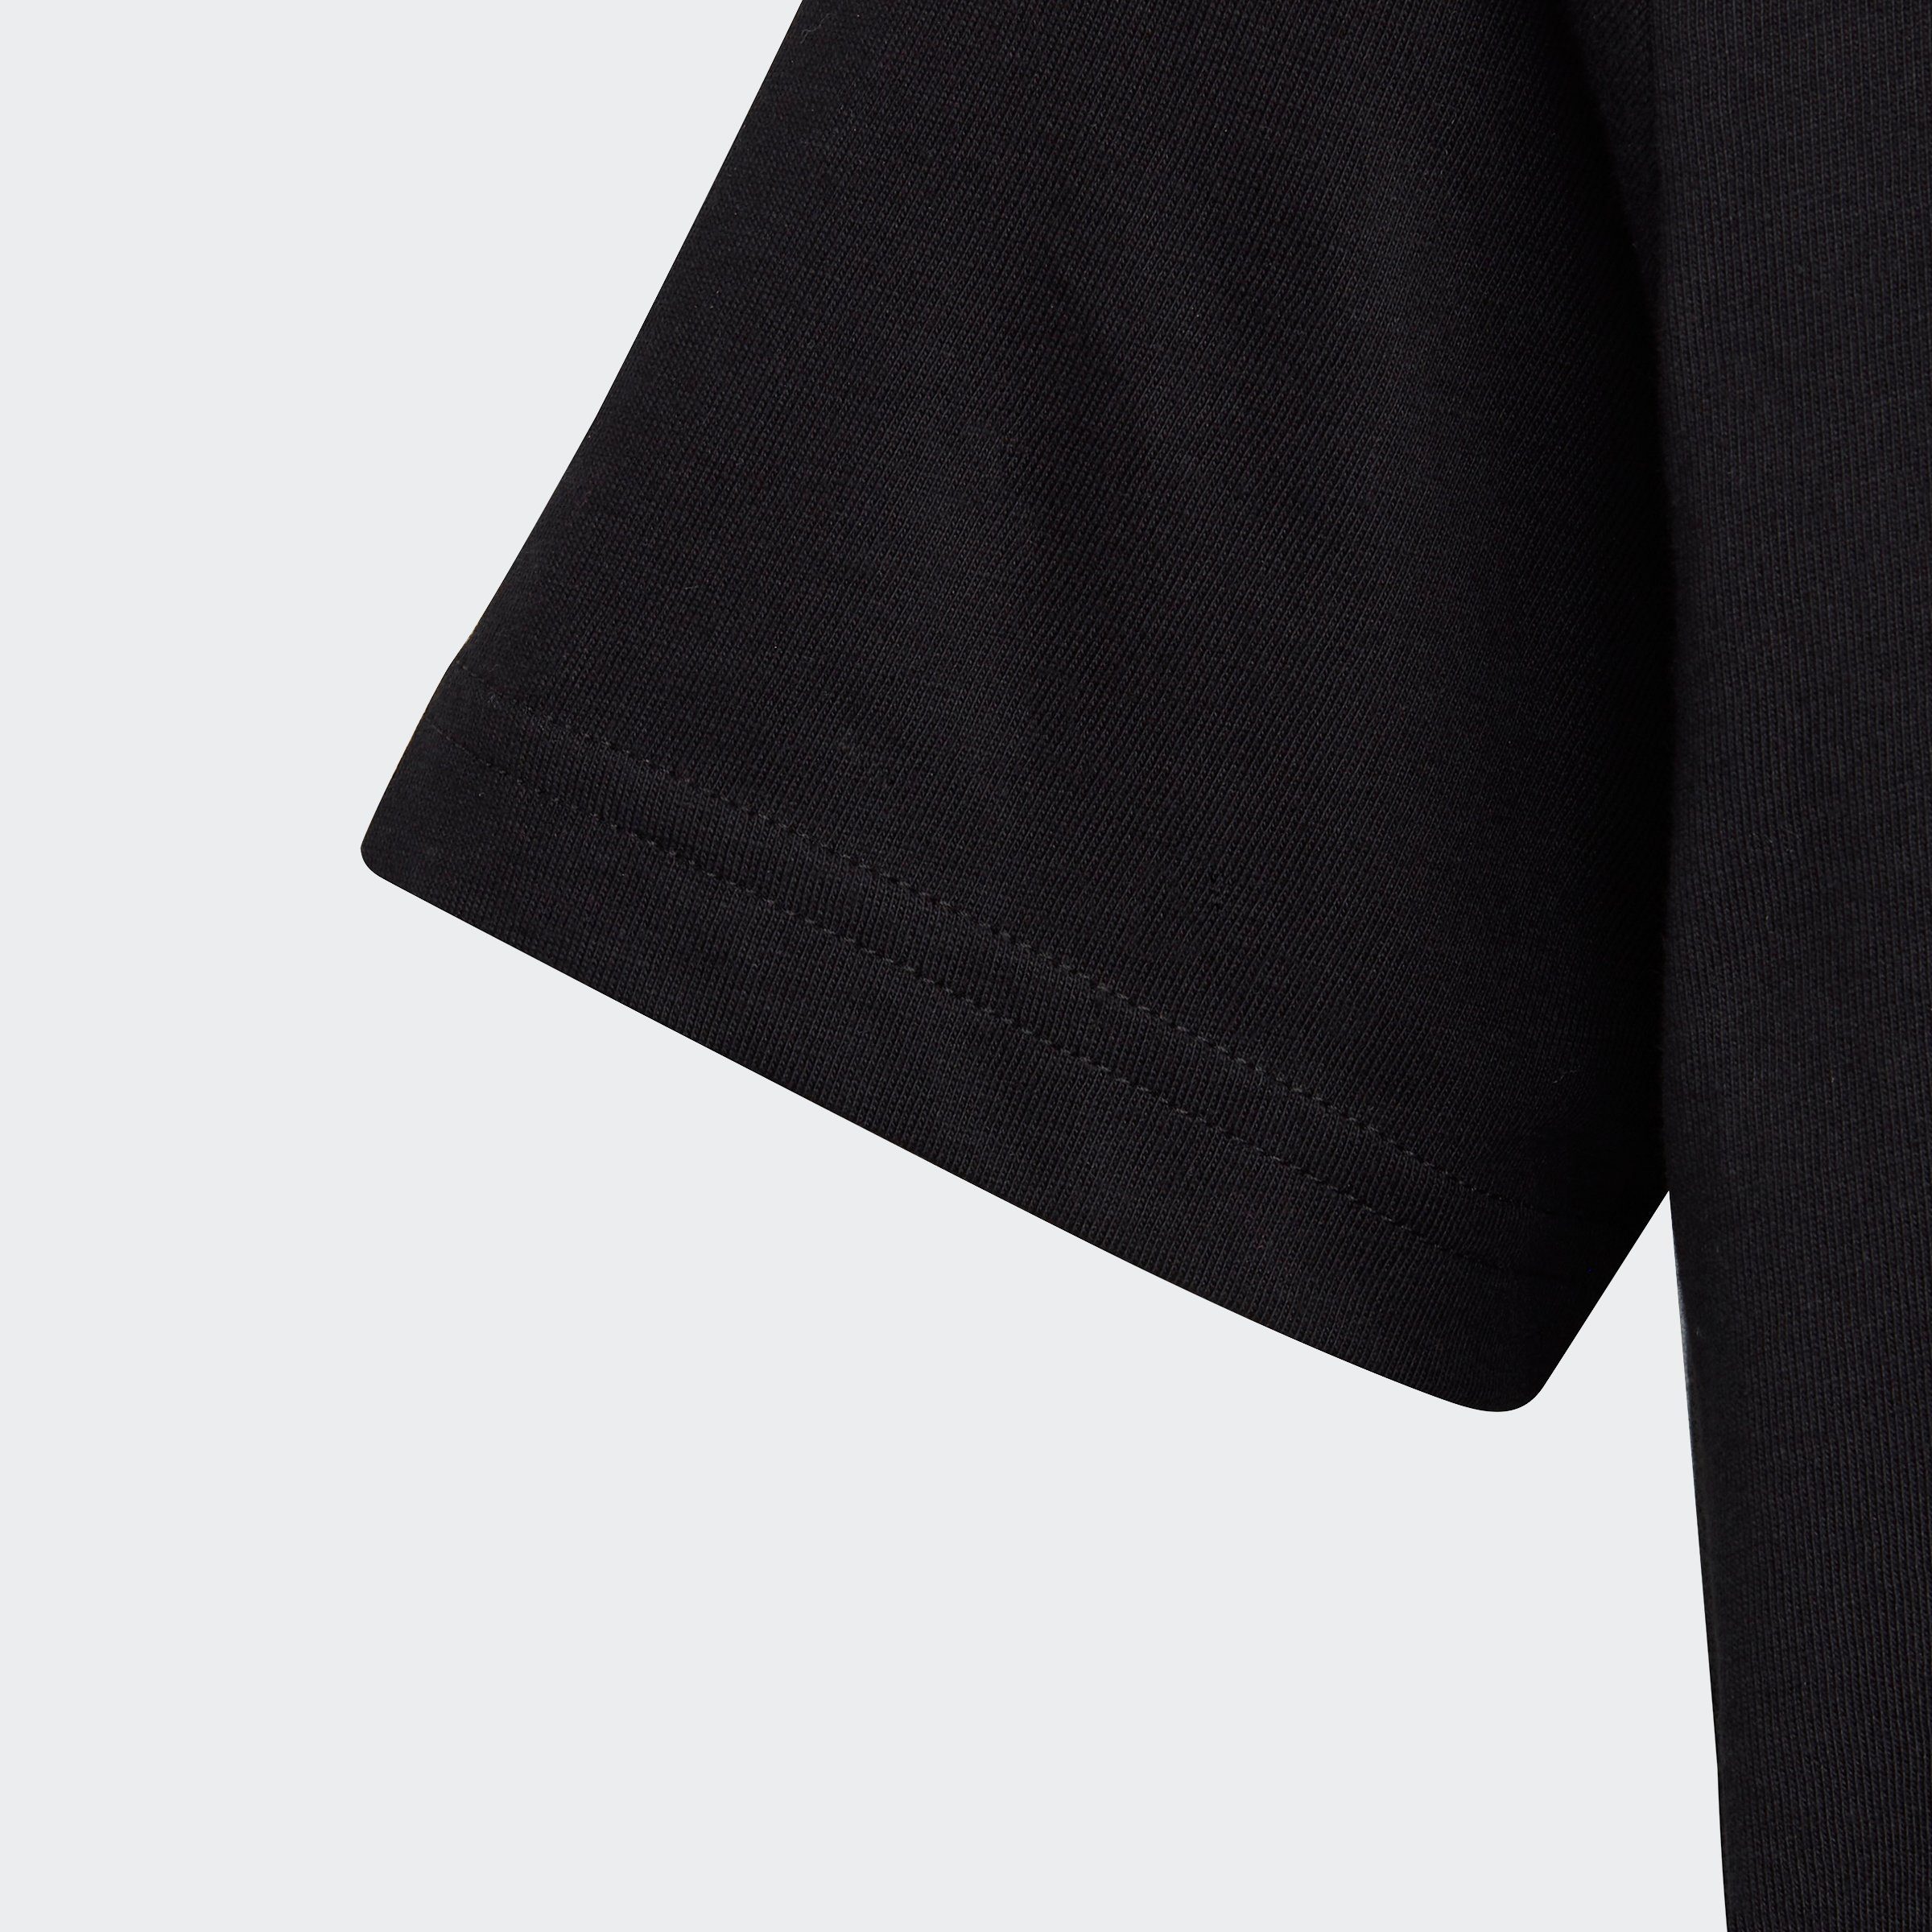 White Black LOGO T-Shirt Sportswear SMALL ESSENTIALS adidas COTTON /